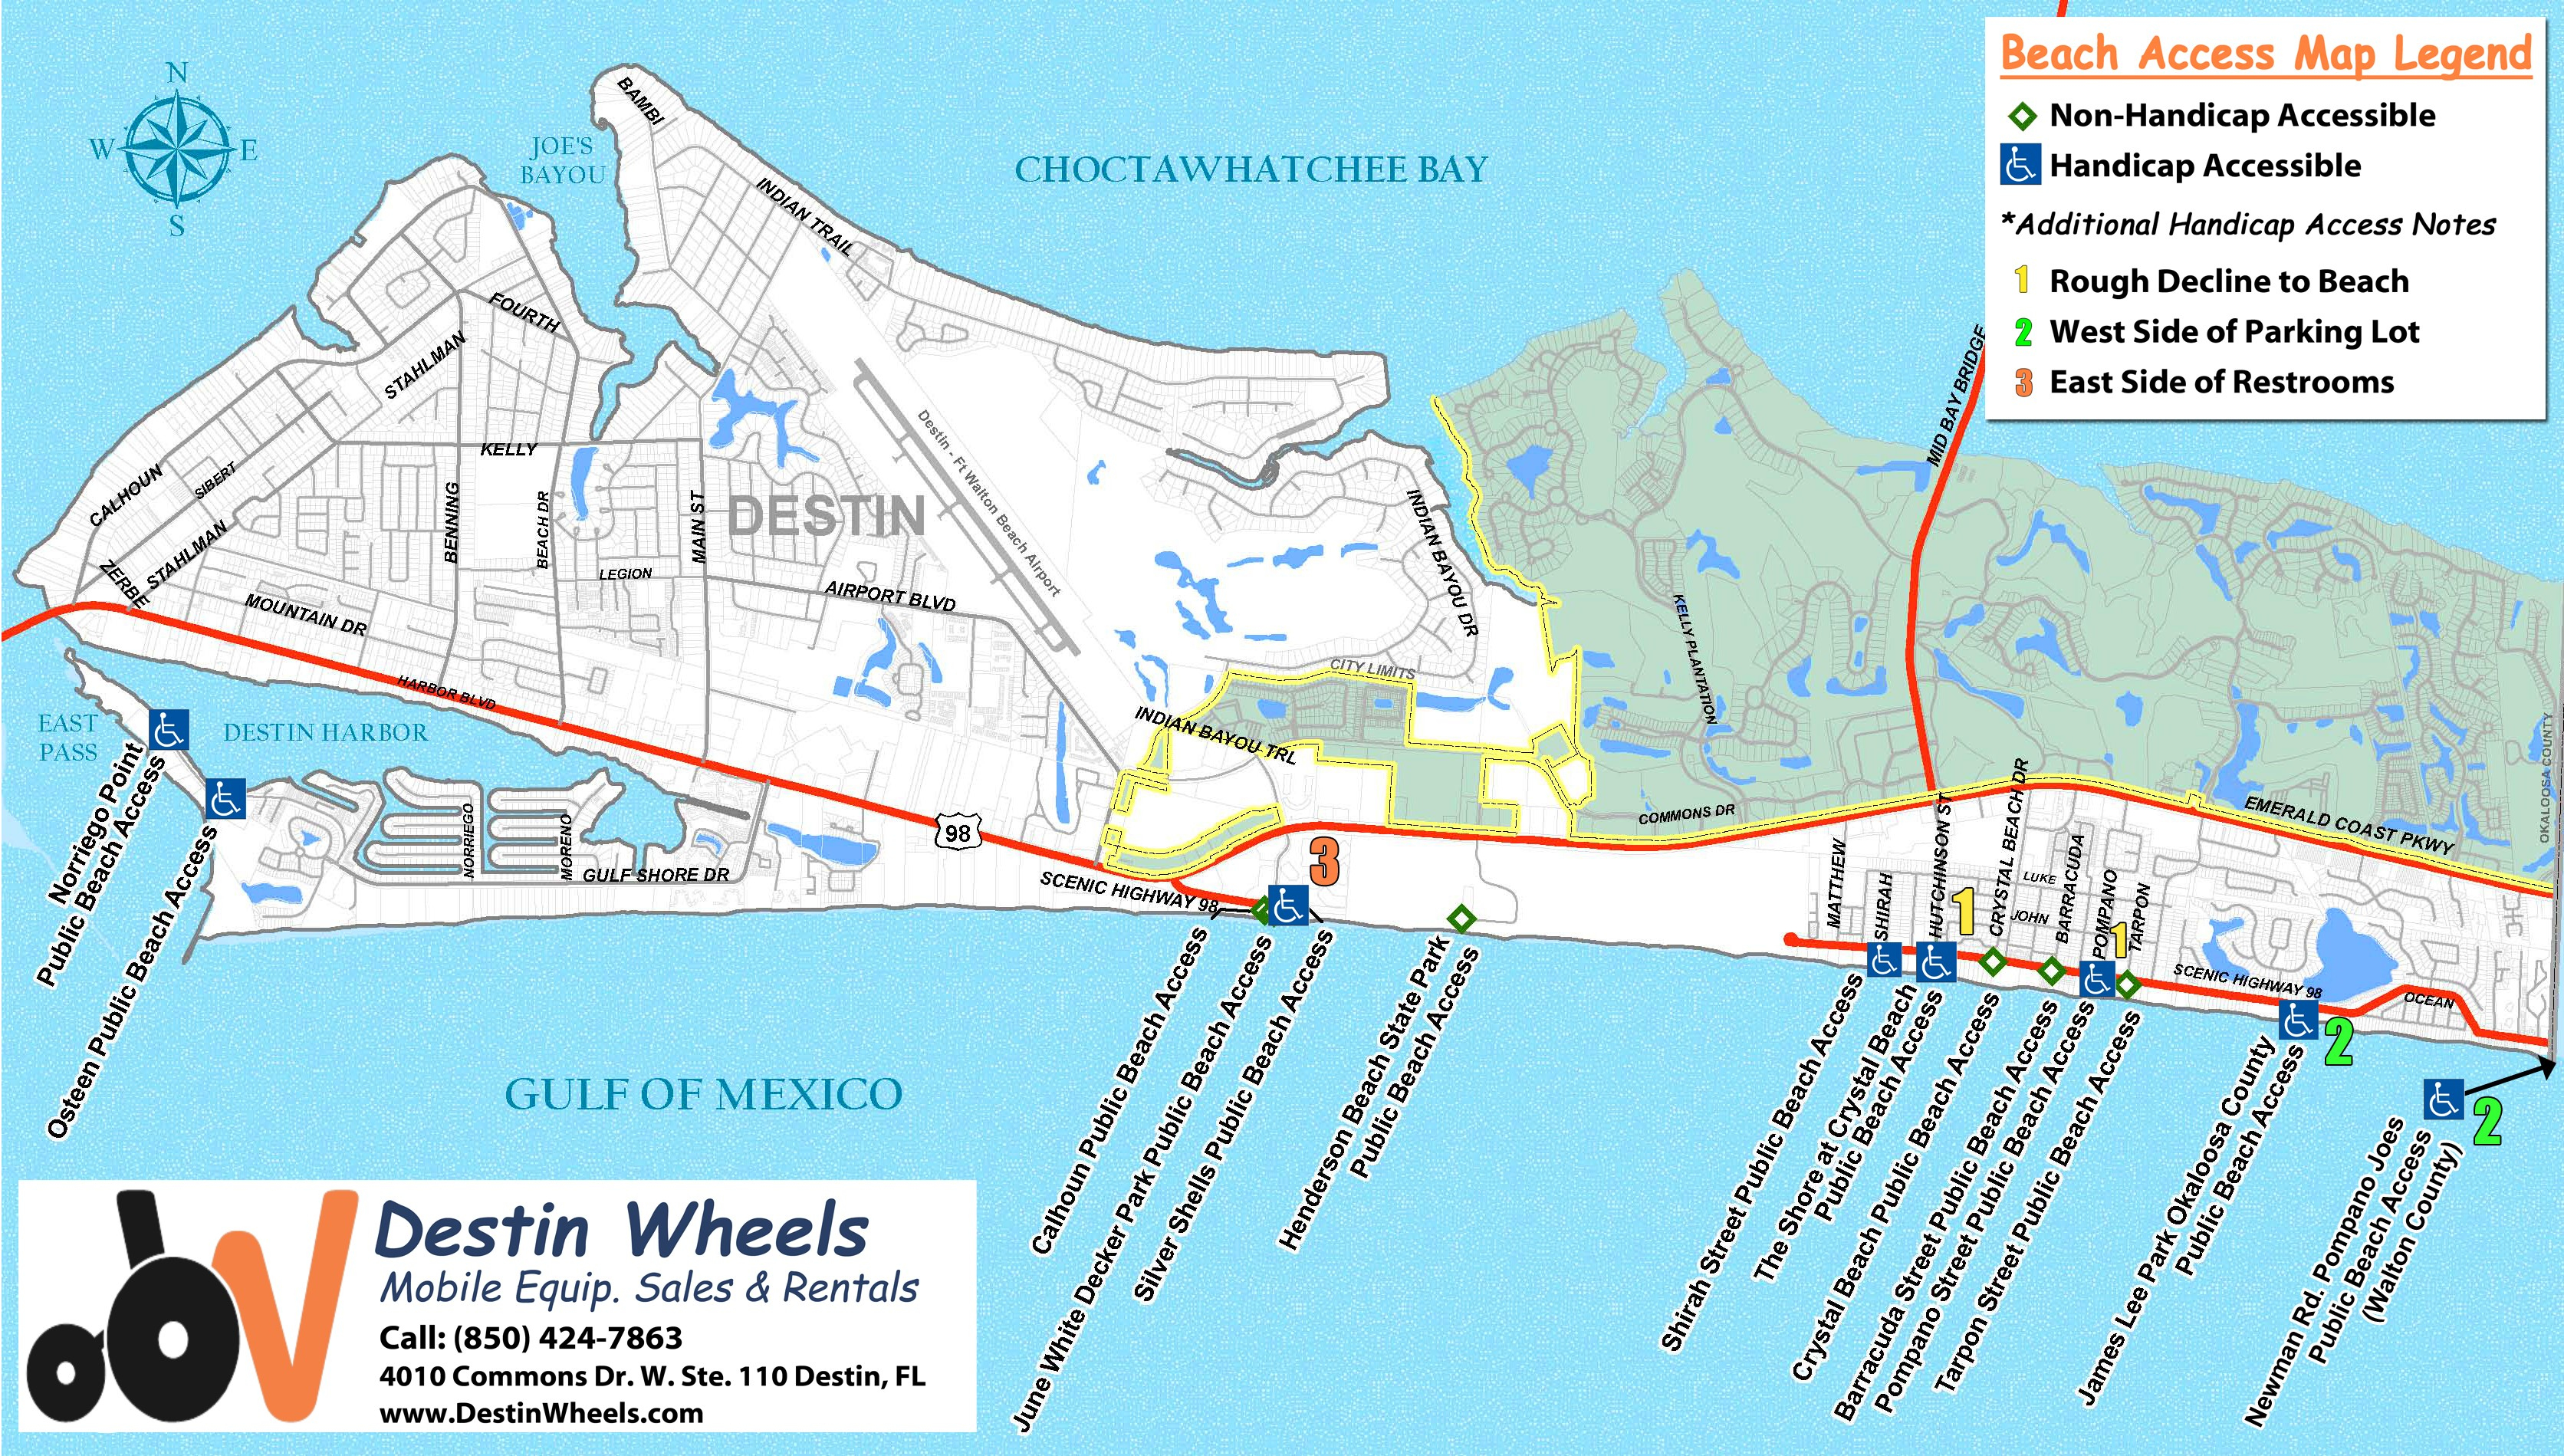 30A &amp;amp; Destin Beach Access - Destin Wheels Rentals In Destin, Fl - Map Of Beaches On The Gulf Side Of Florida